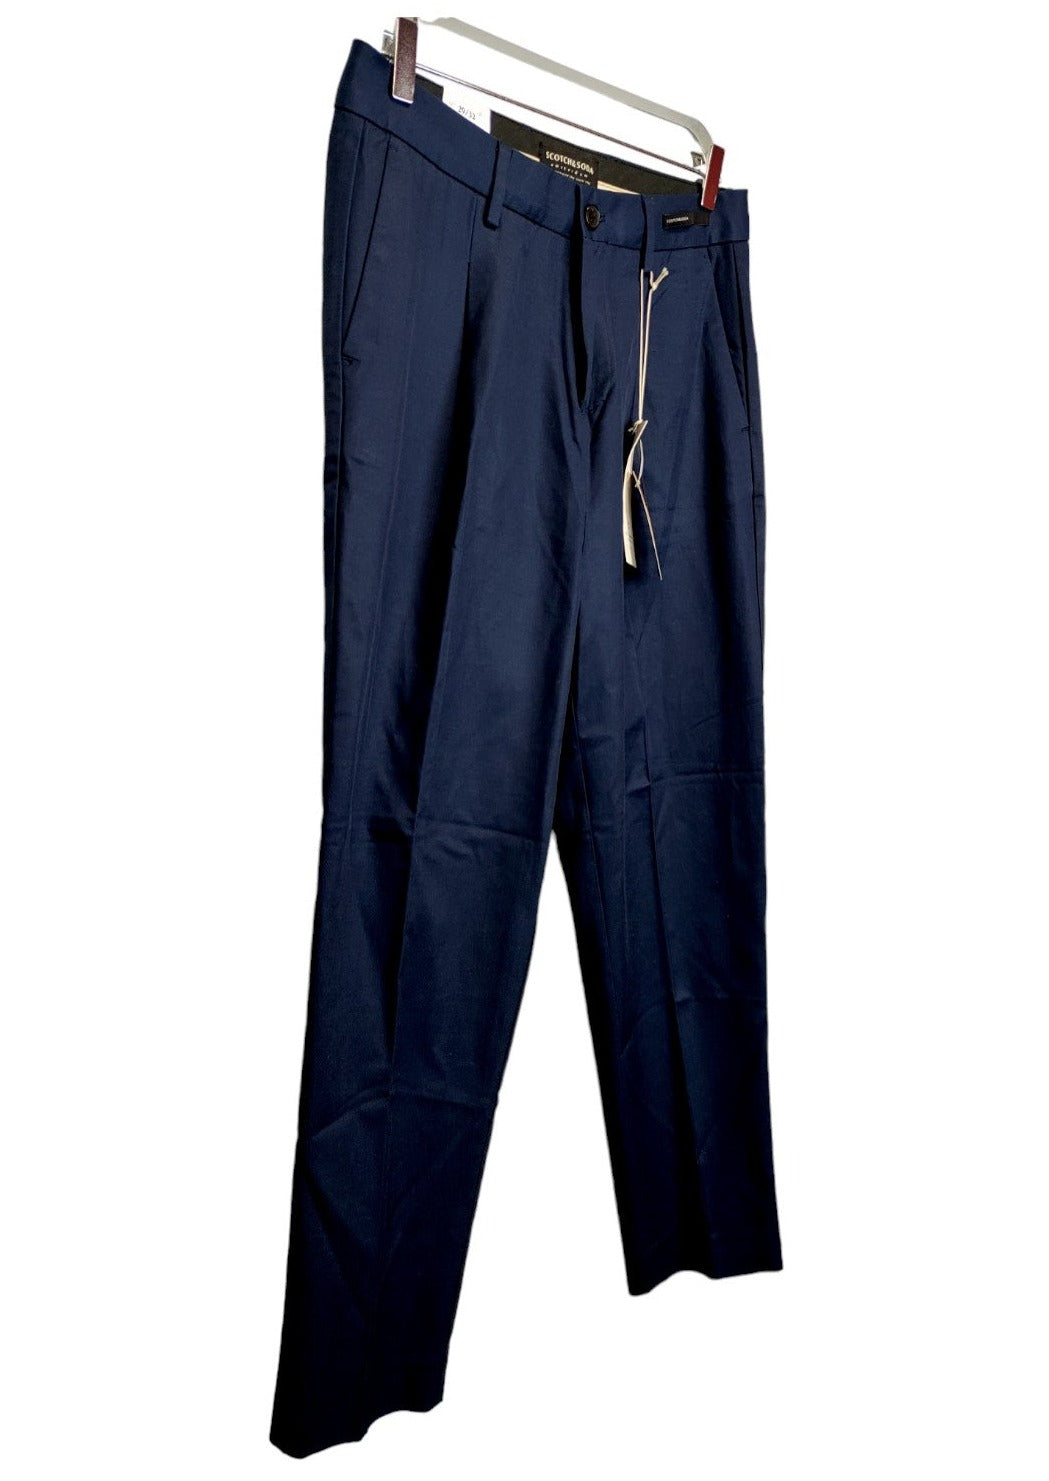 Stock, Ανδρικό Παντελόνι SCOTCH & SODA σε Σκούρο Μπλε Χρώμα (No 29)